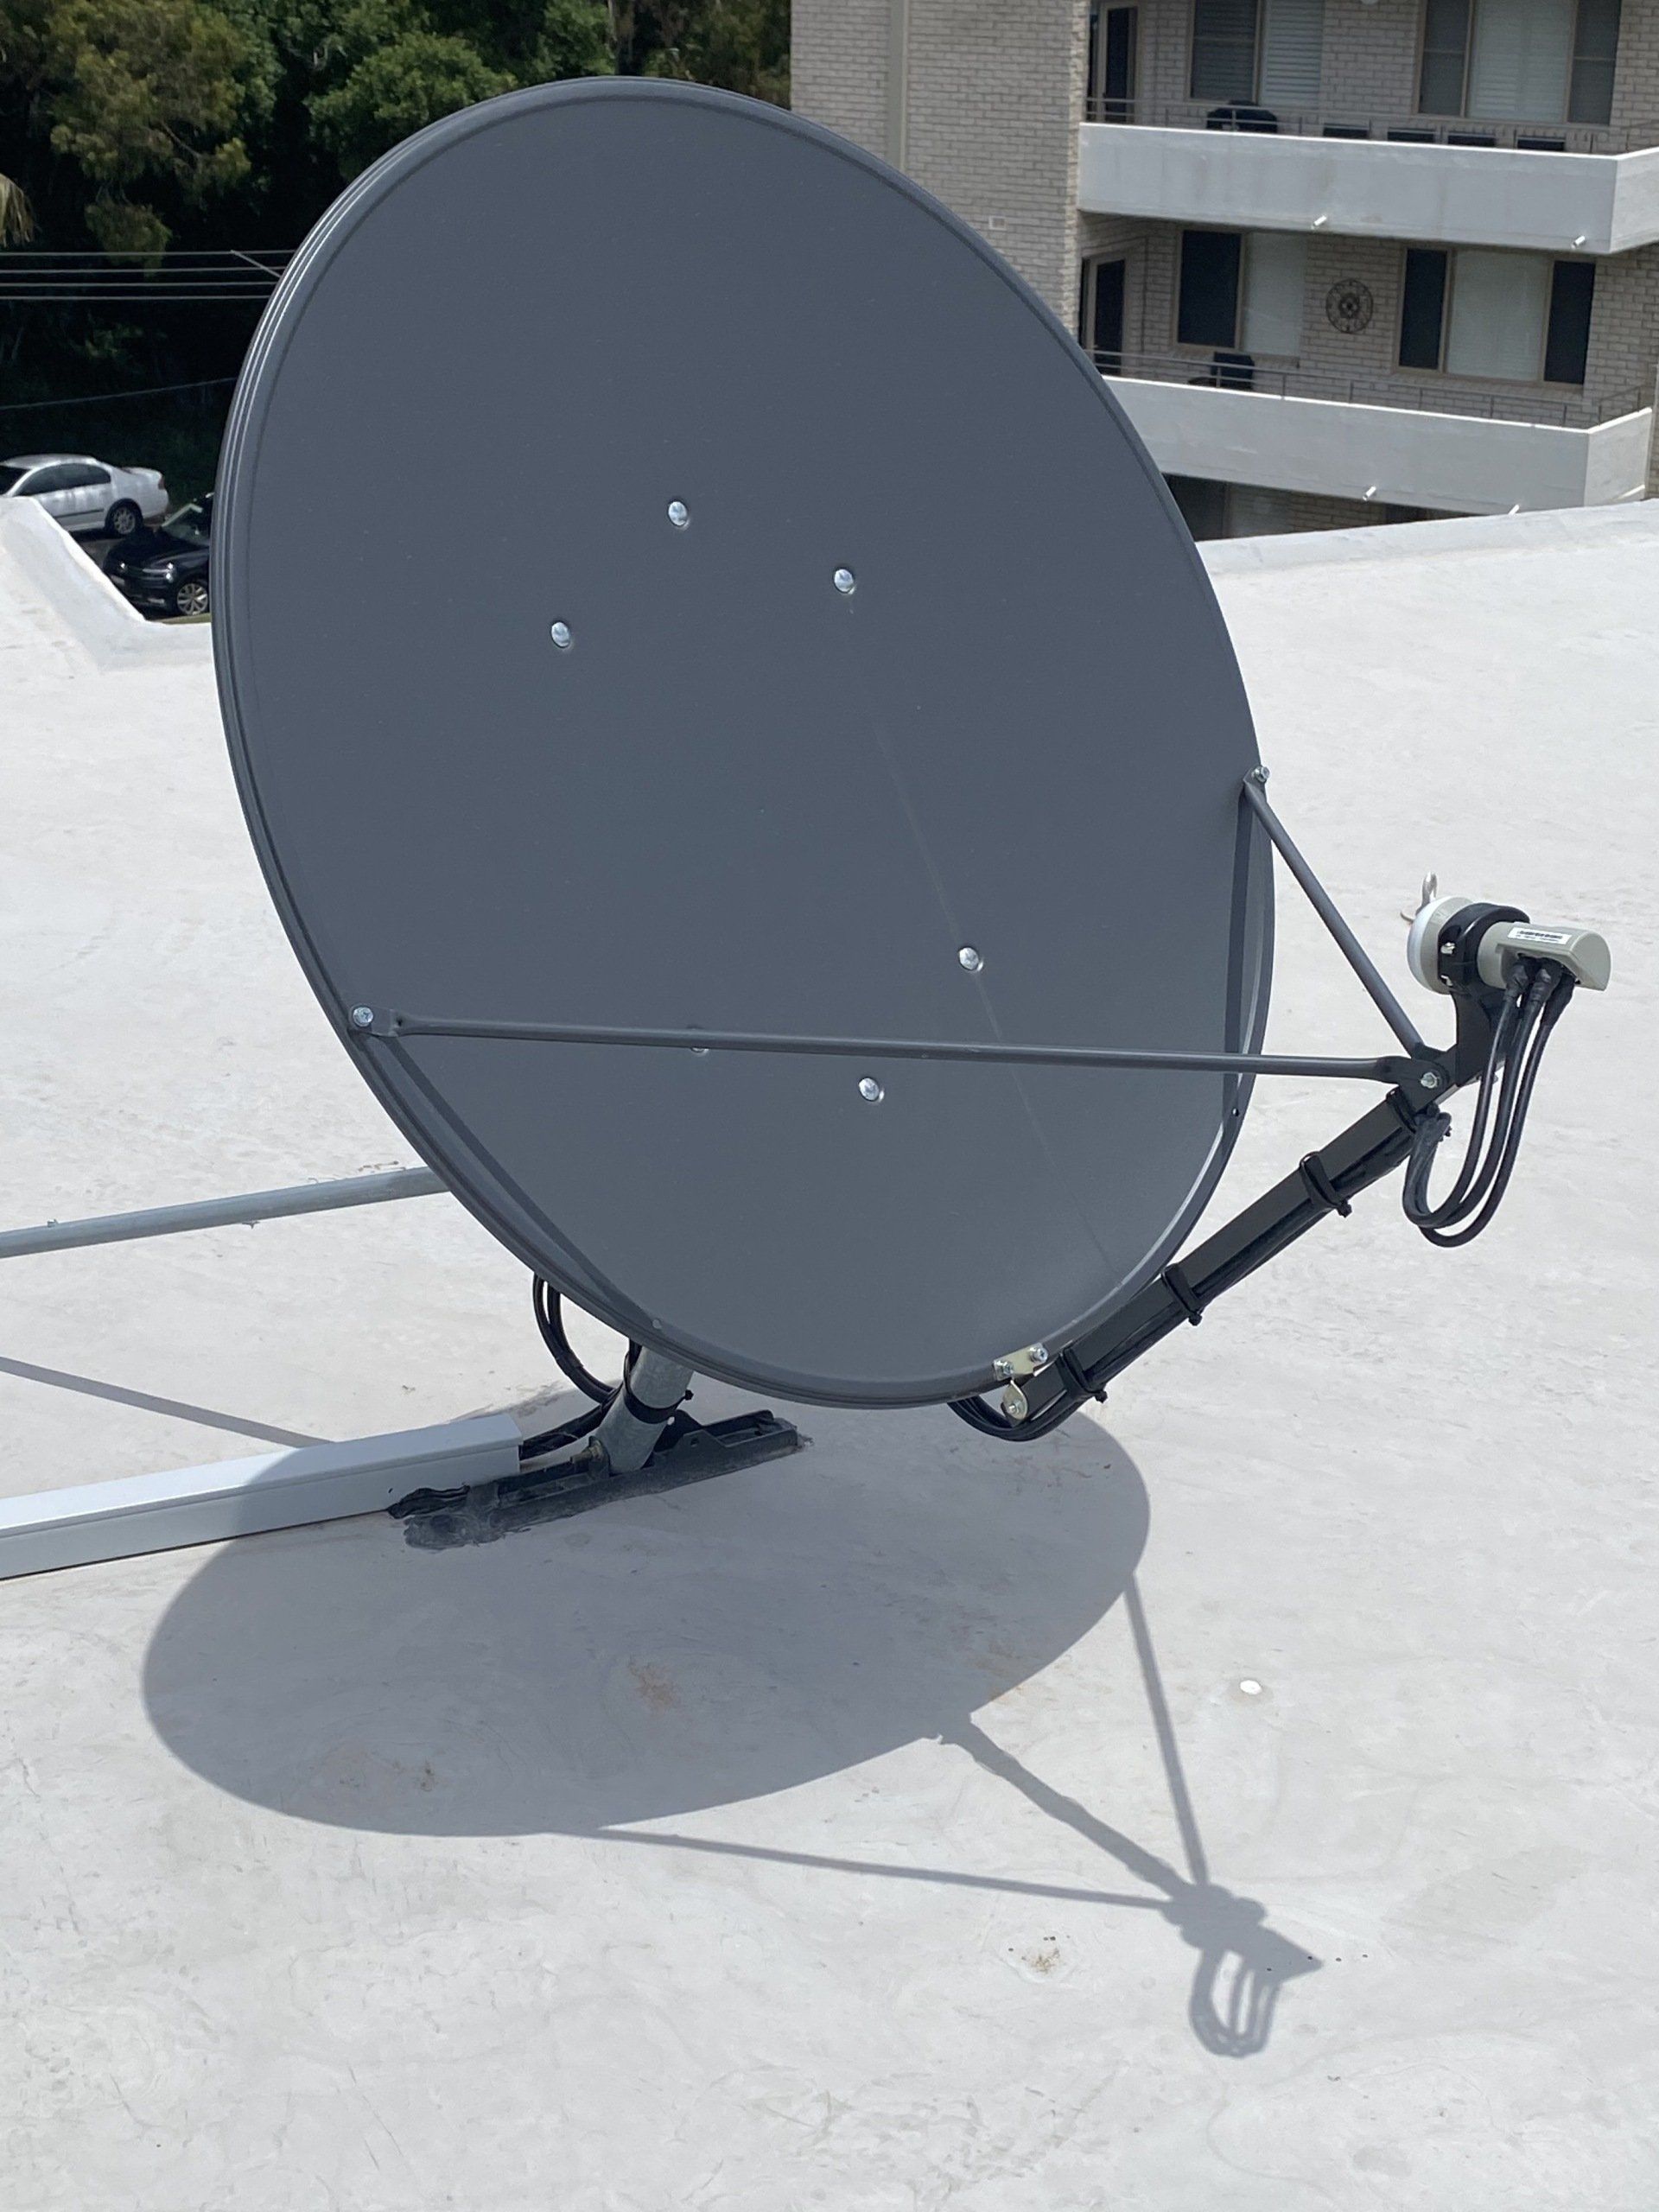 Remote Satellite - Antenna Tech